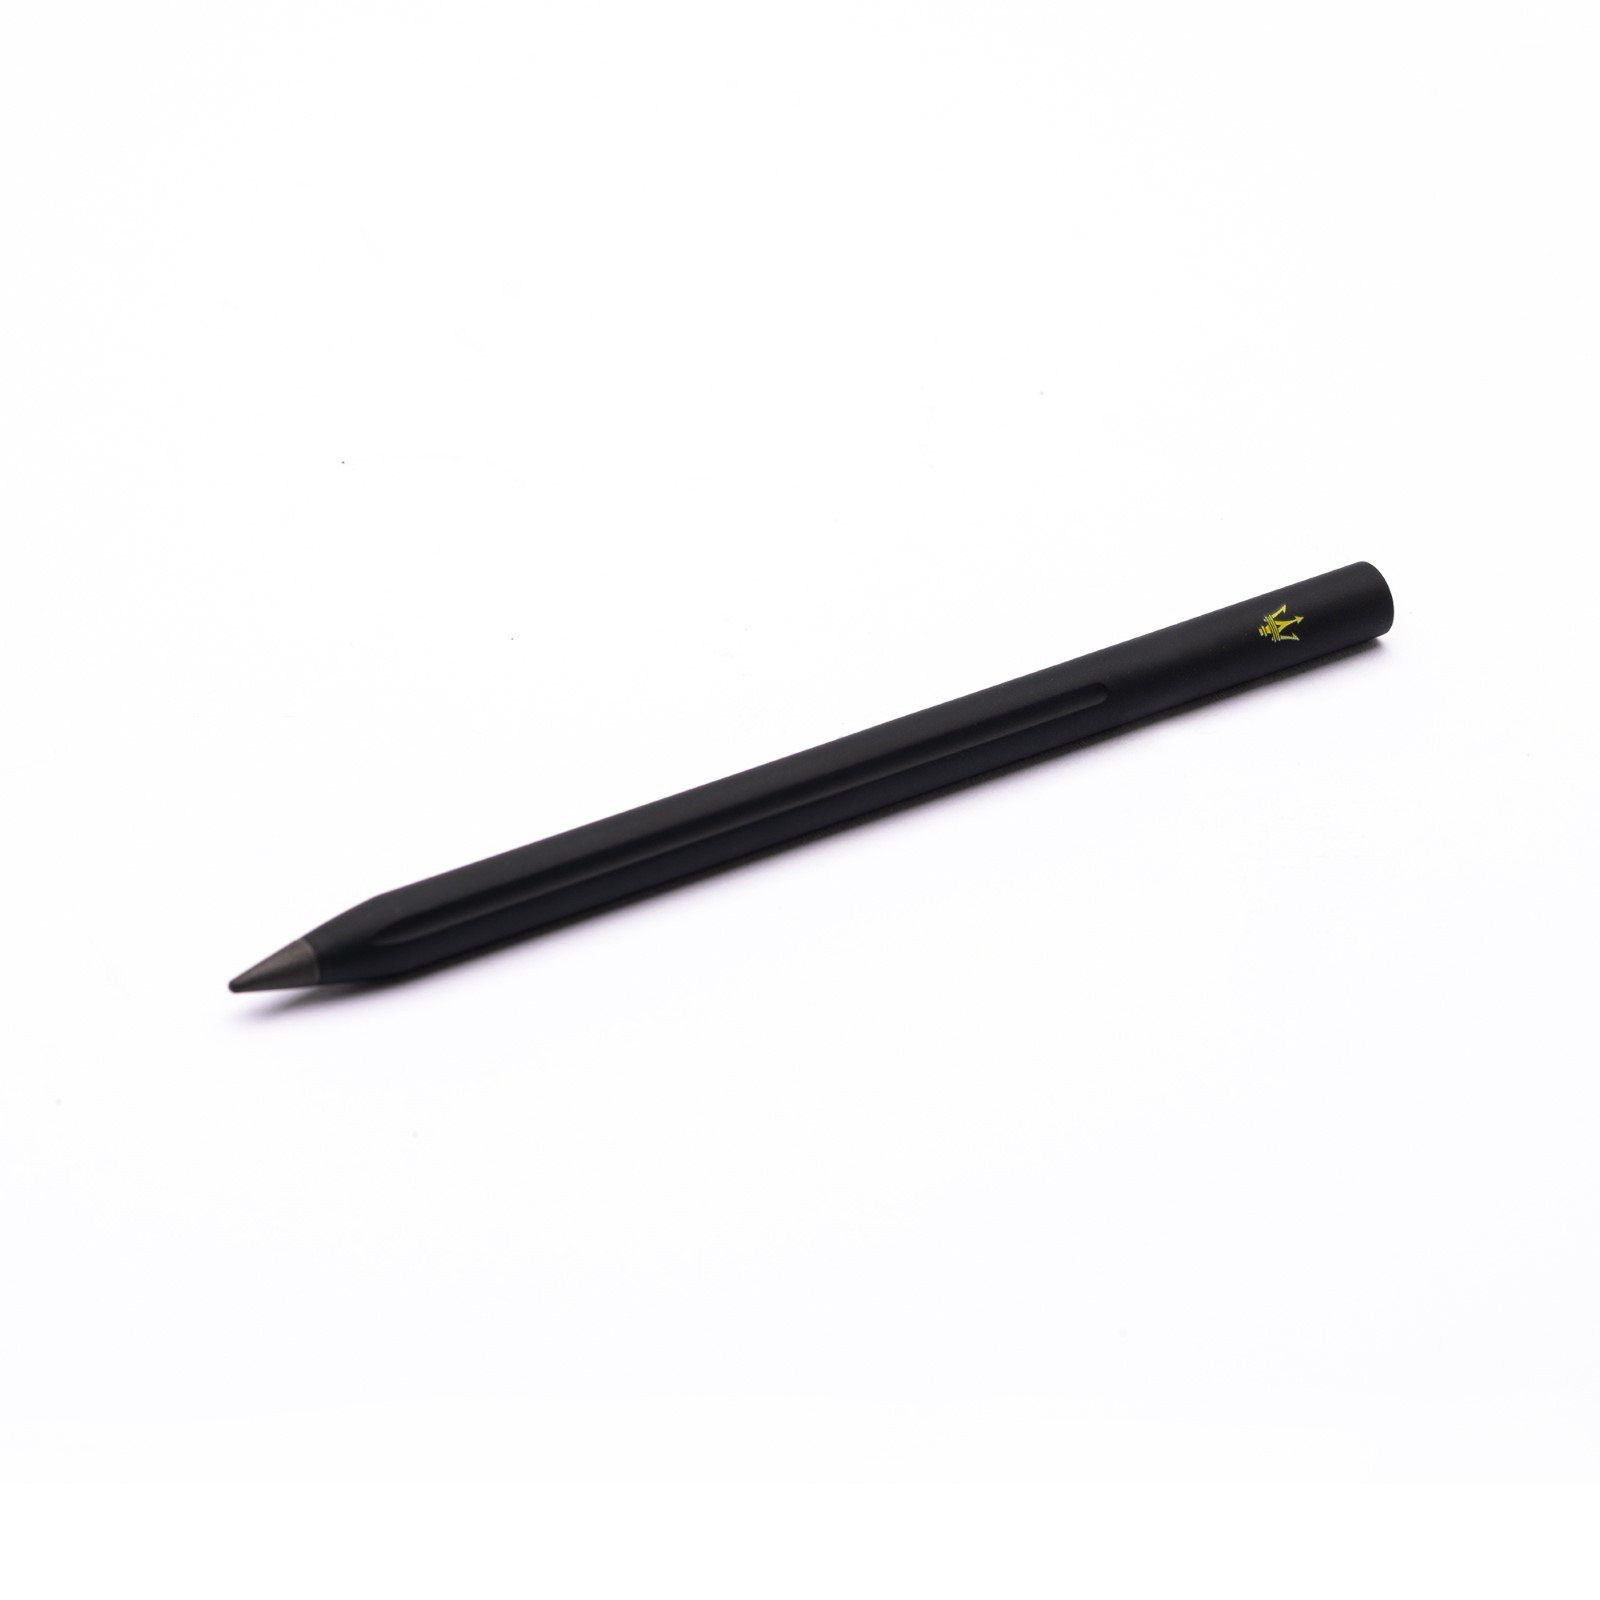 Pininfarina Bleistift Maserati Bleistift (kein Bleier Schreibgerä, Grafeex Pininfarina Set) Schwarz Smart Pencil